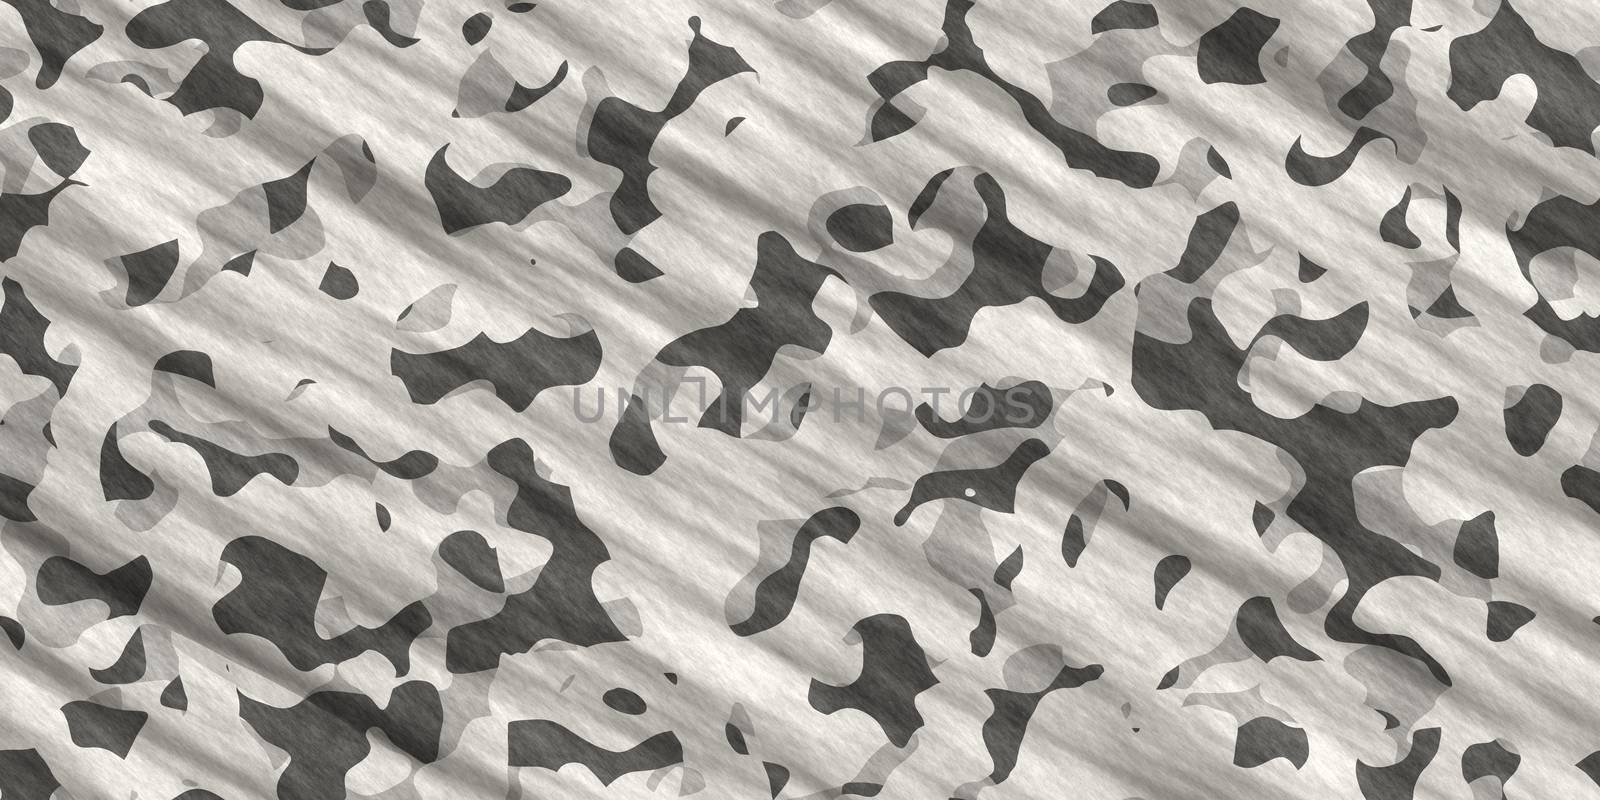 Black & White Army Camouflage Background. Military Uniform Clothing Texture. Seamless Combat Uniform.